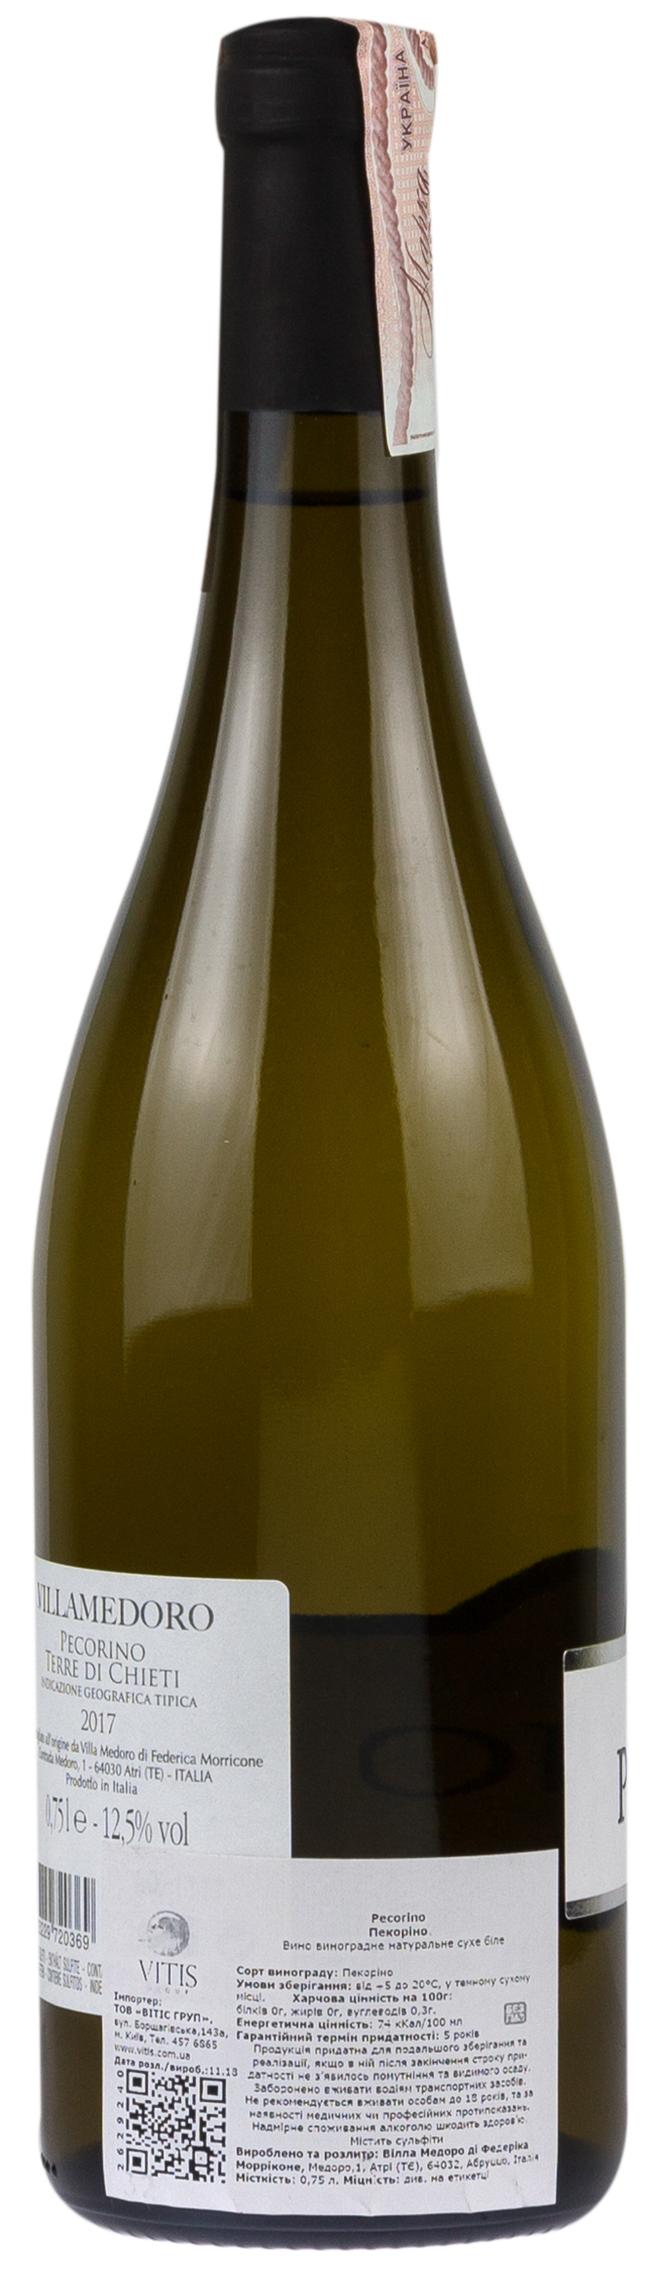 Villamedoro Pecorino 2017 Set 6 bottles - 3